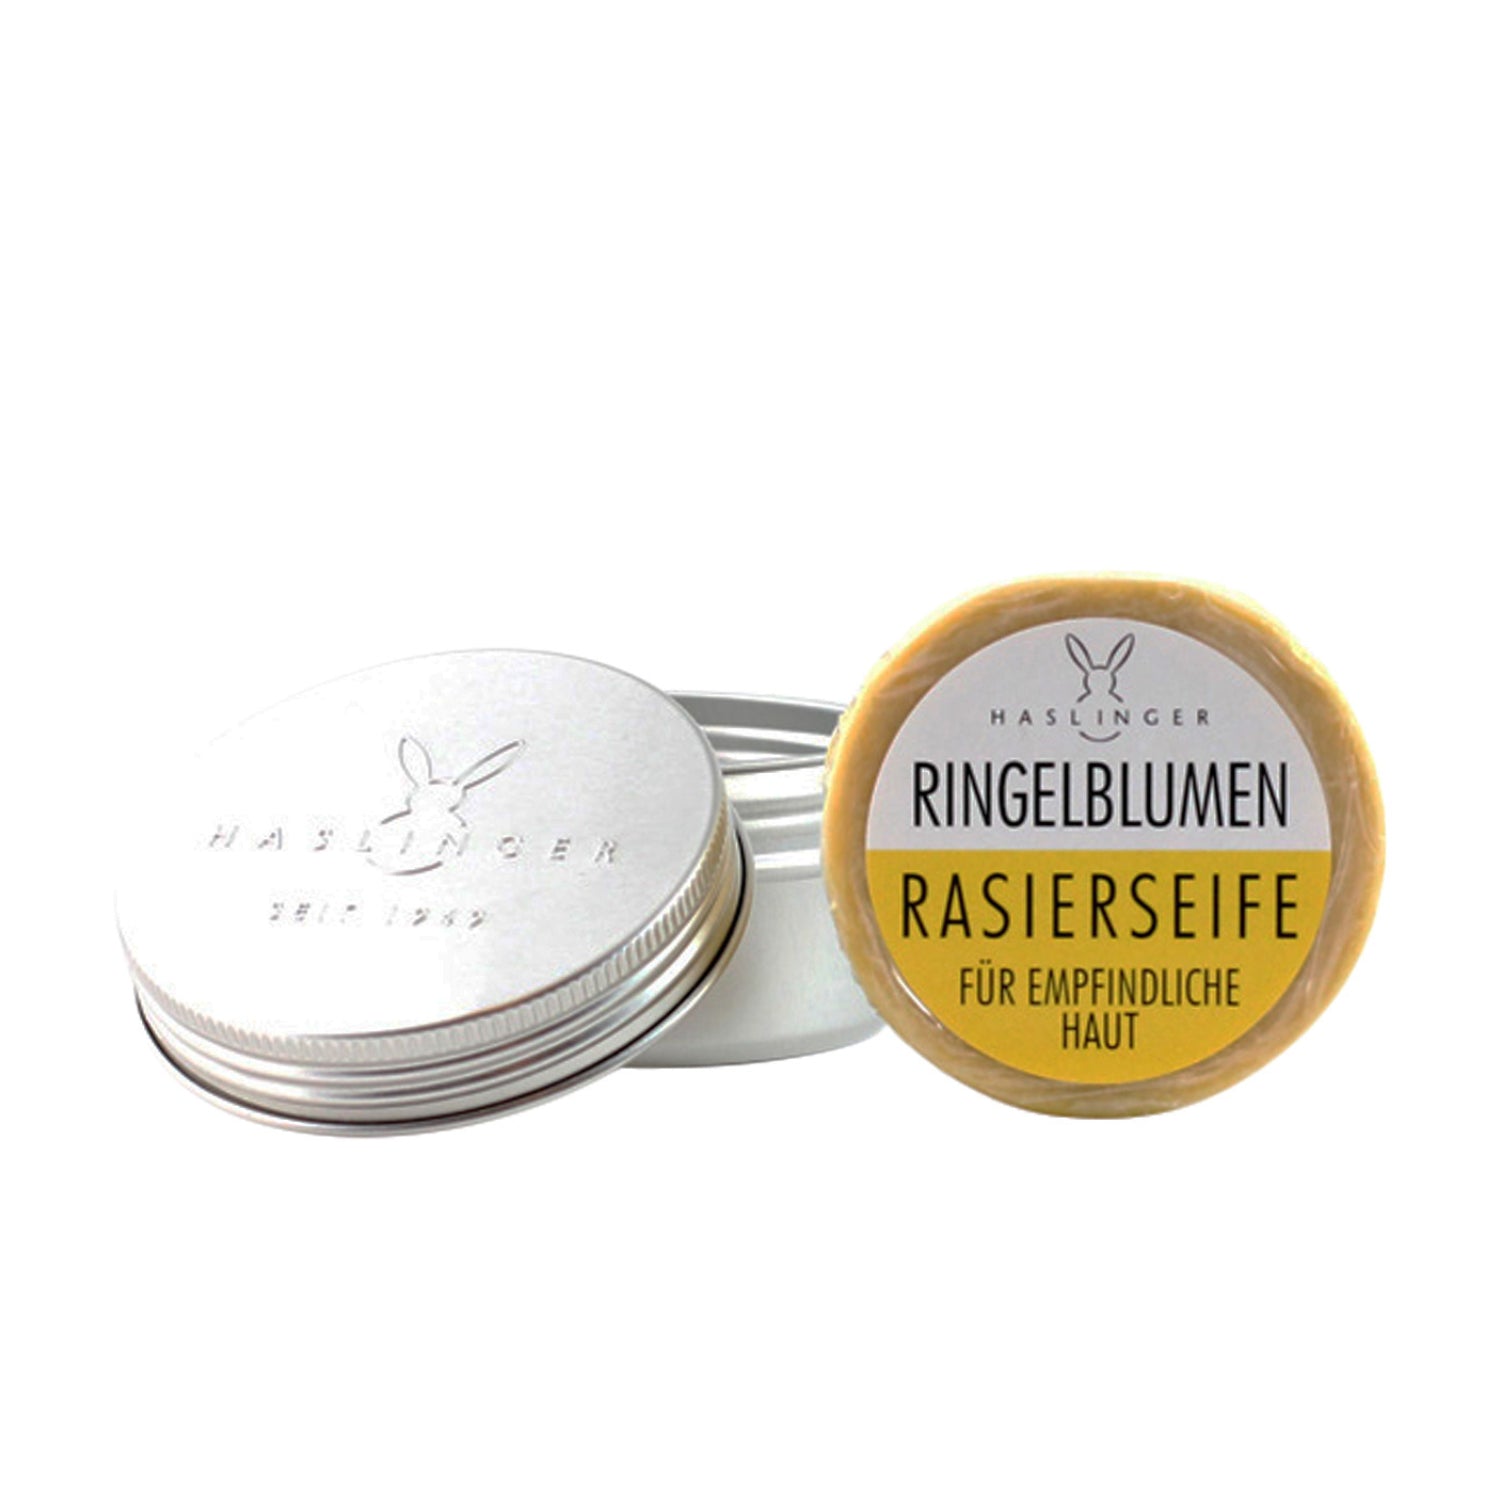 Haslinger Ringelblumen Rasierseife in Aluminiumdose - No More Beard